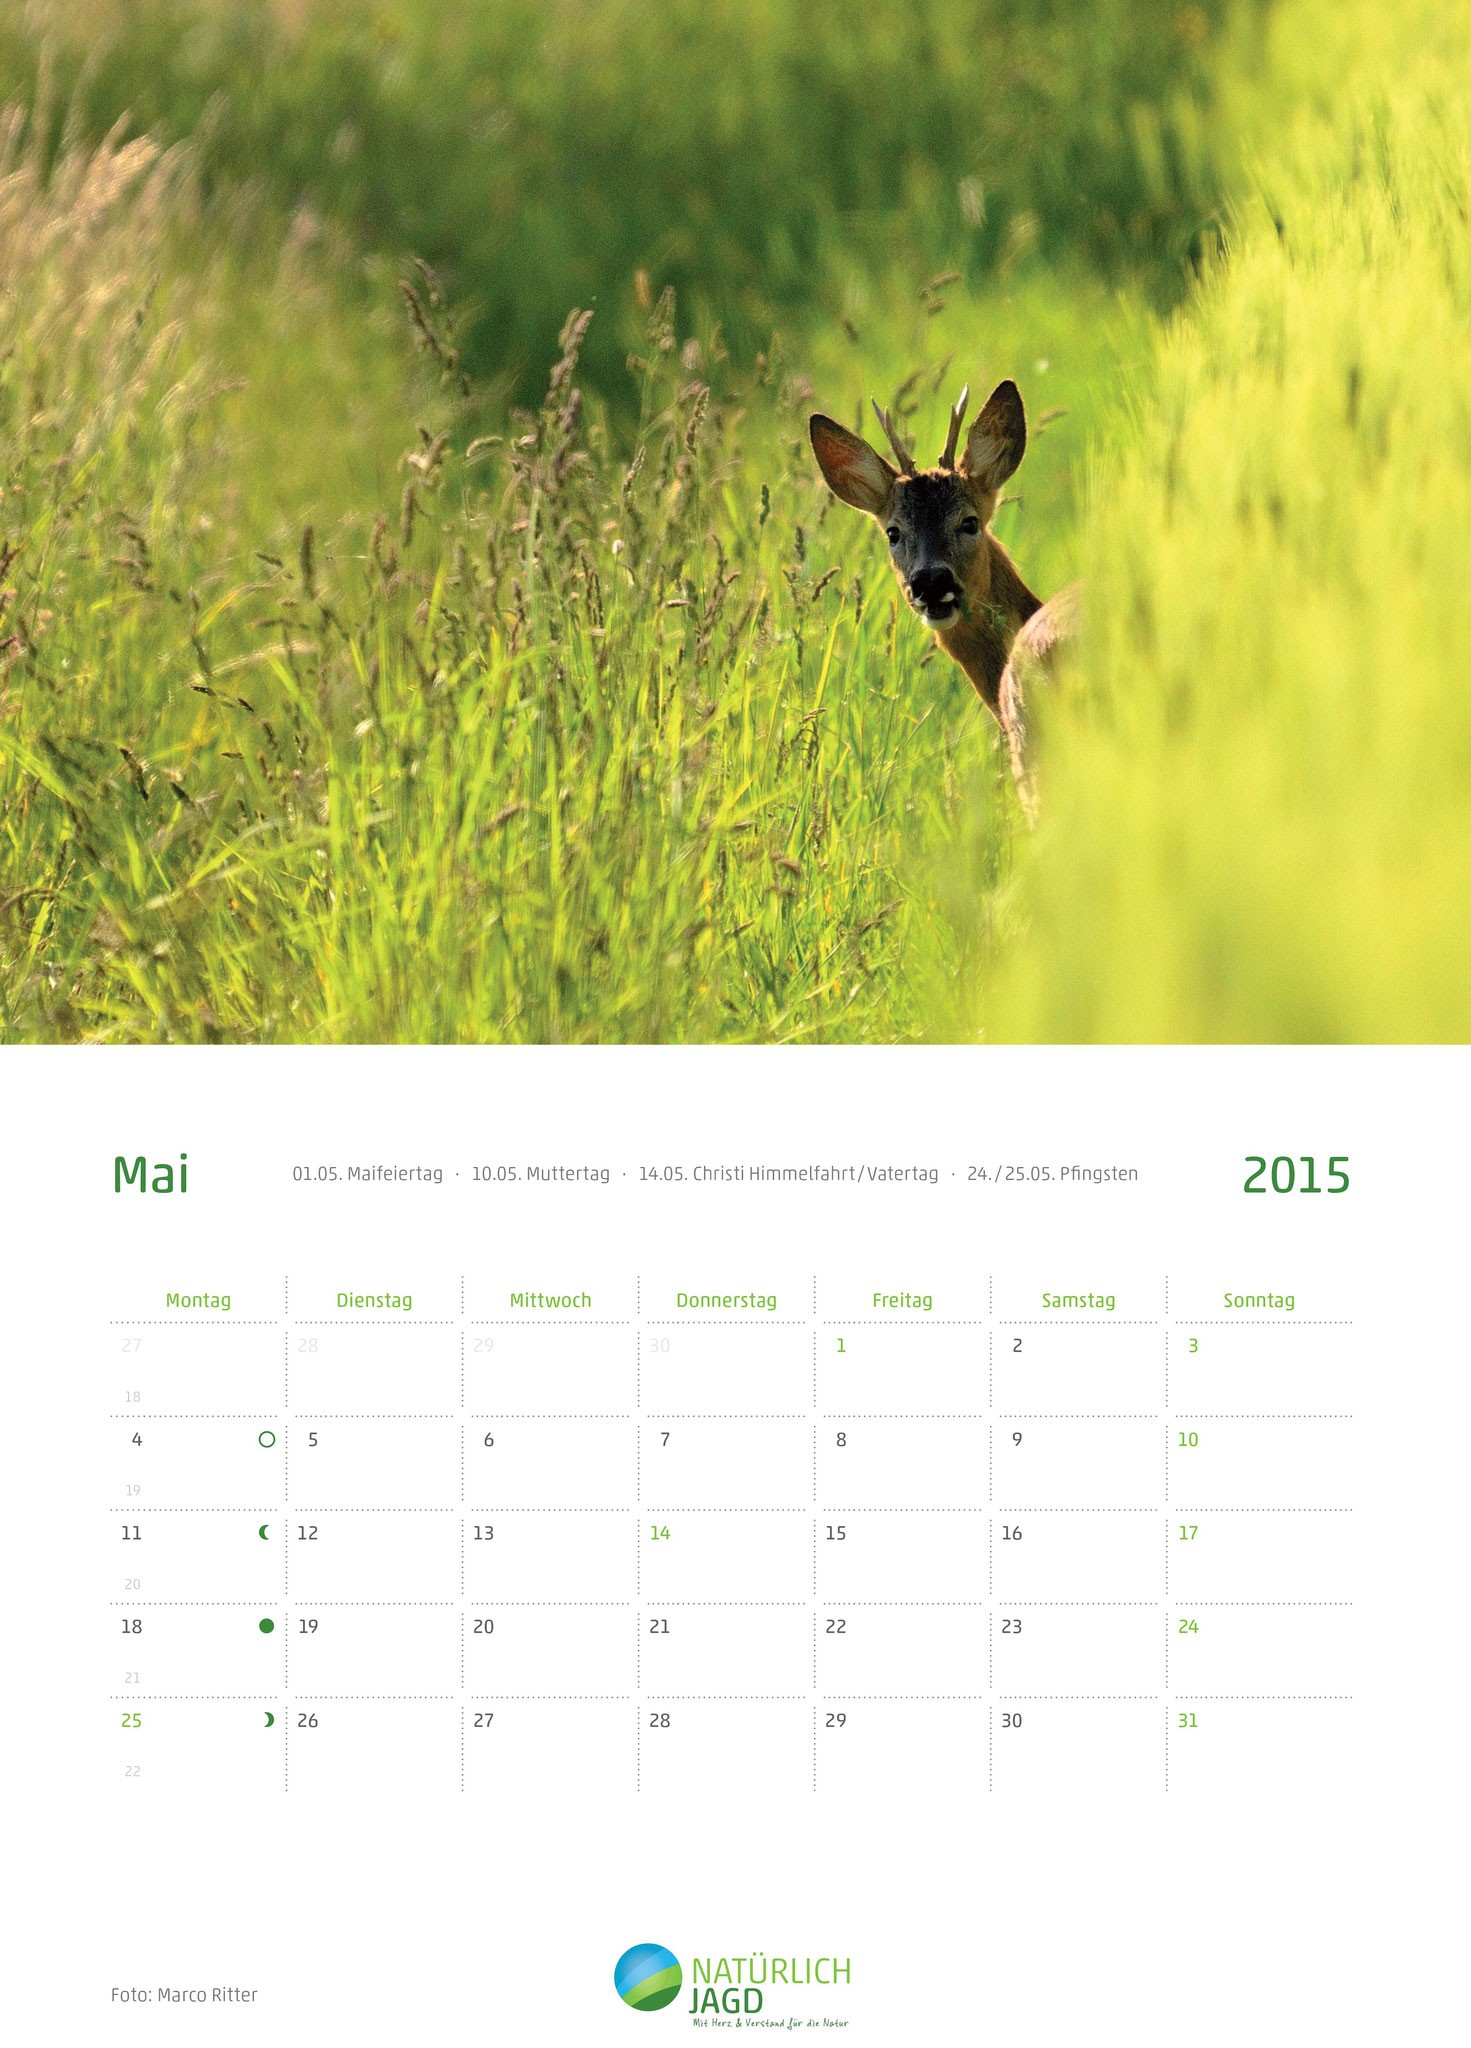 "Natürlich Jagd Fotoreporter" des Monats Mai 2014 der Jägerstiftung natur+mensch